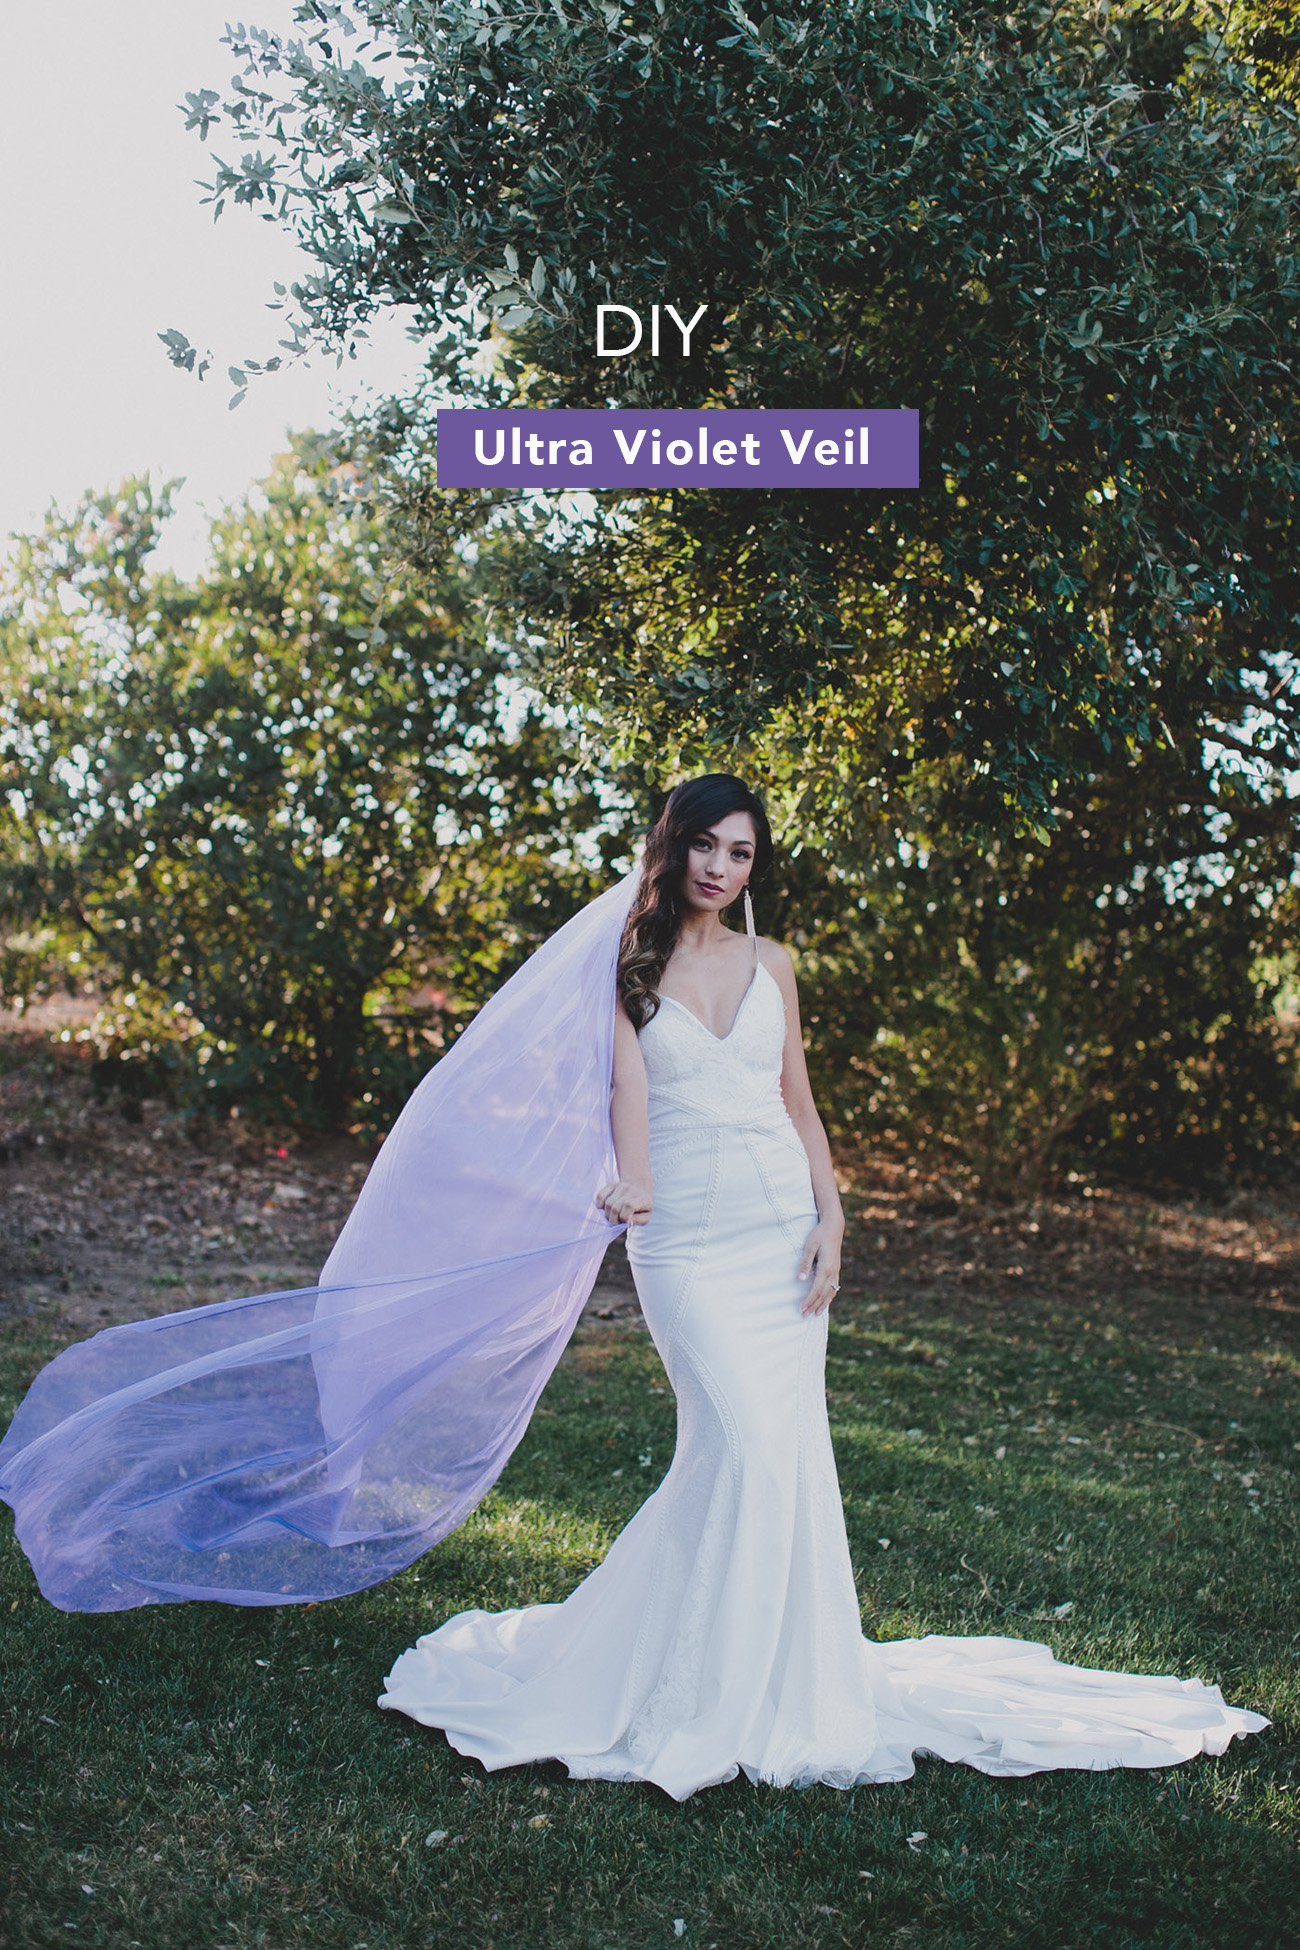 DIY Ultra Violet Veil